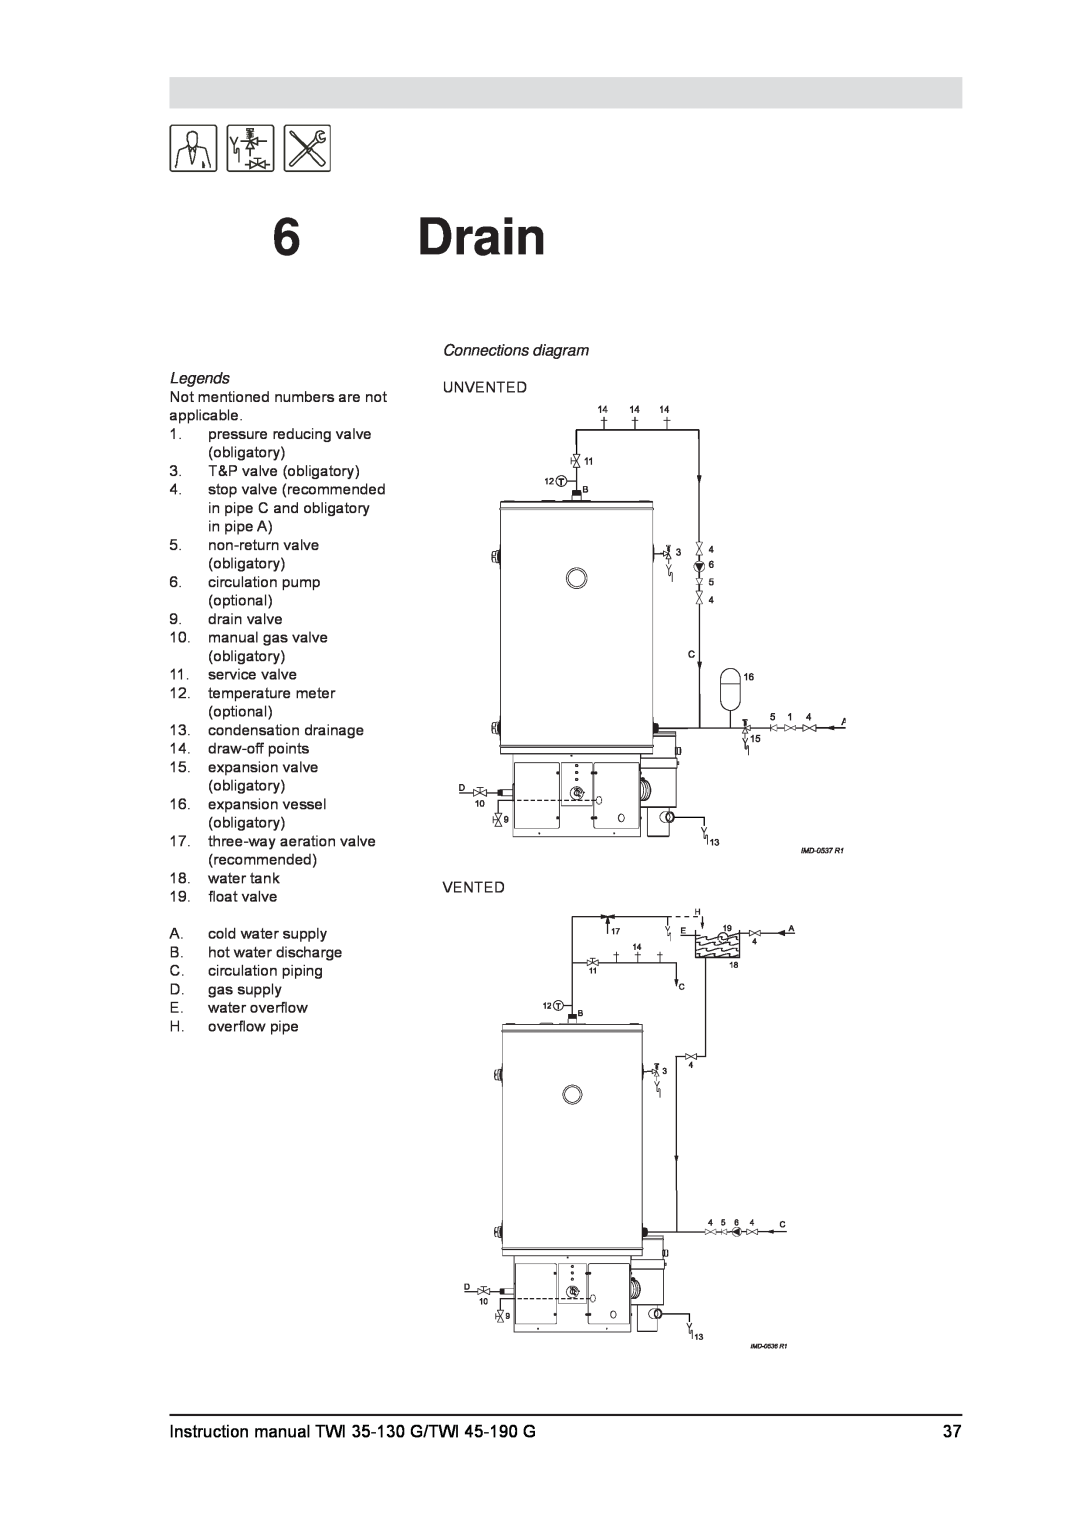 A.O. Smith service manual Drain, Instruction manual TWI 35-130 G/TWI 45-190 G 